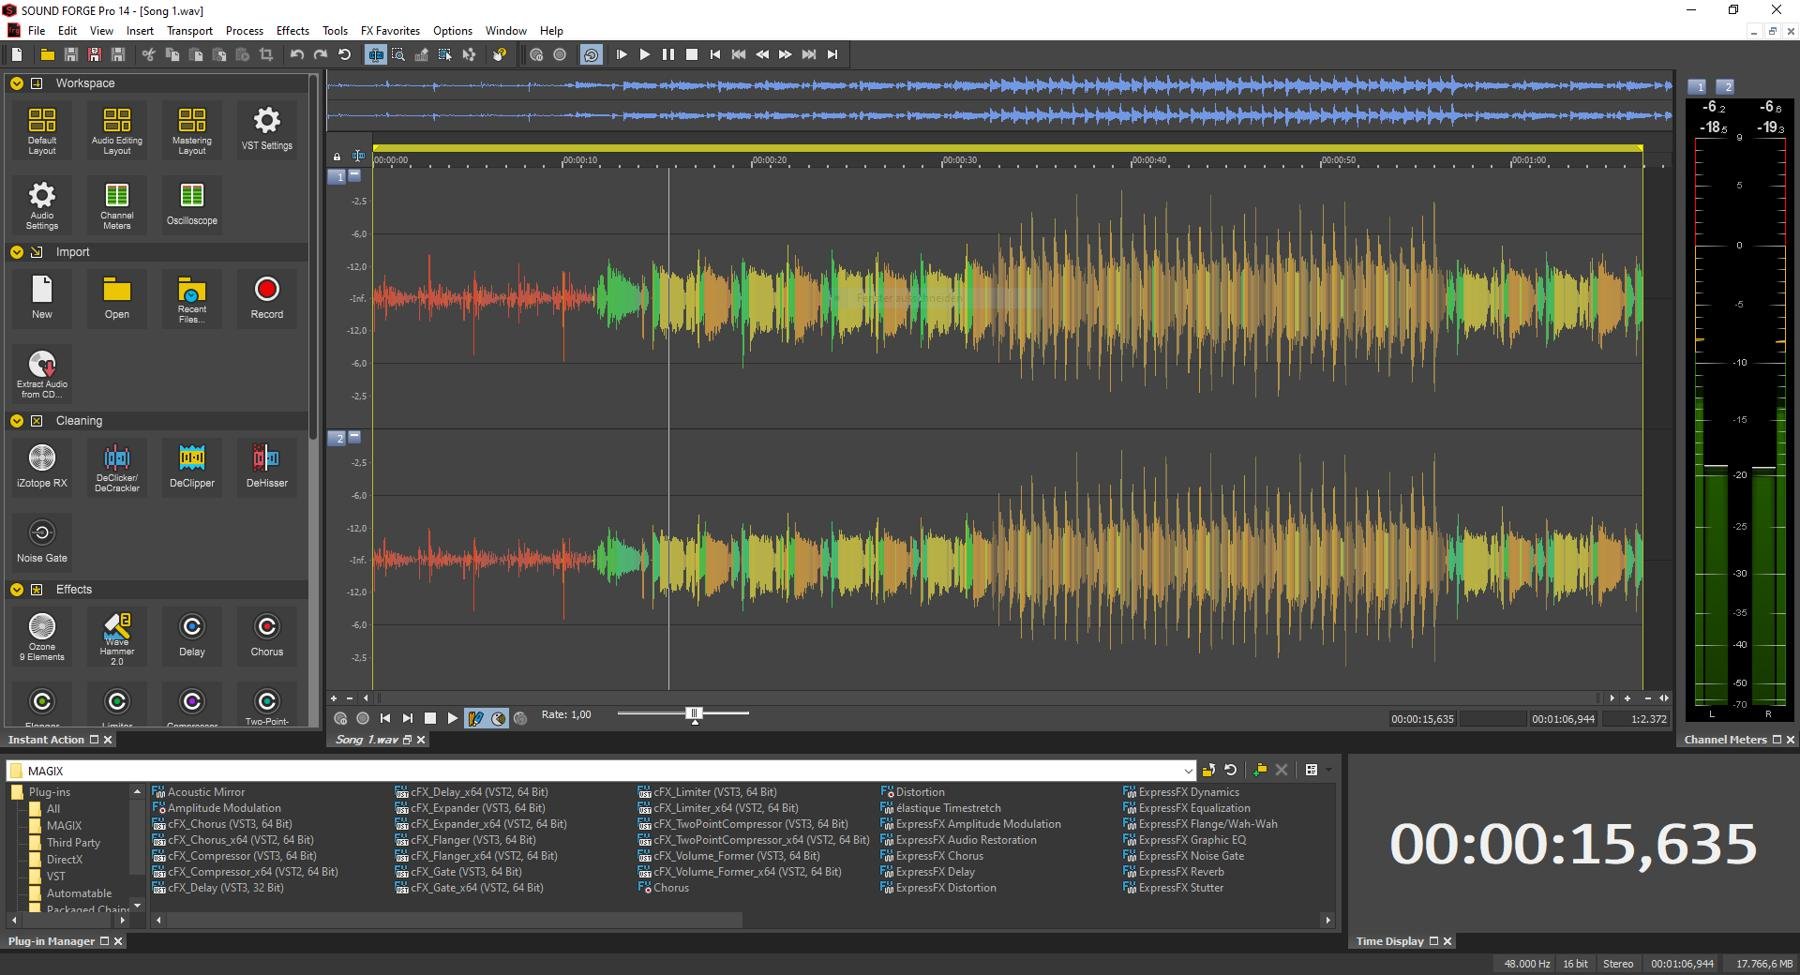 sound forge audio studio 10.0 build 245 update